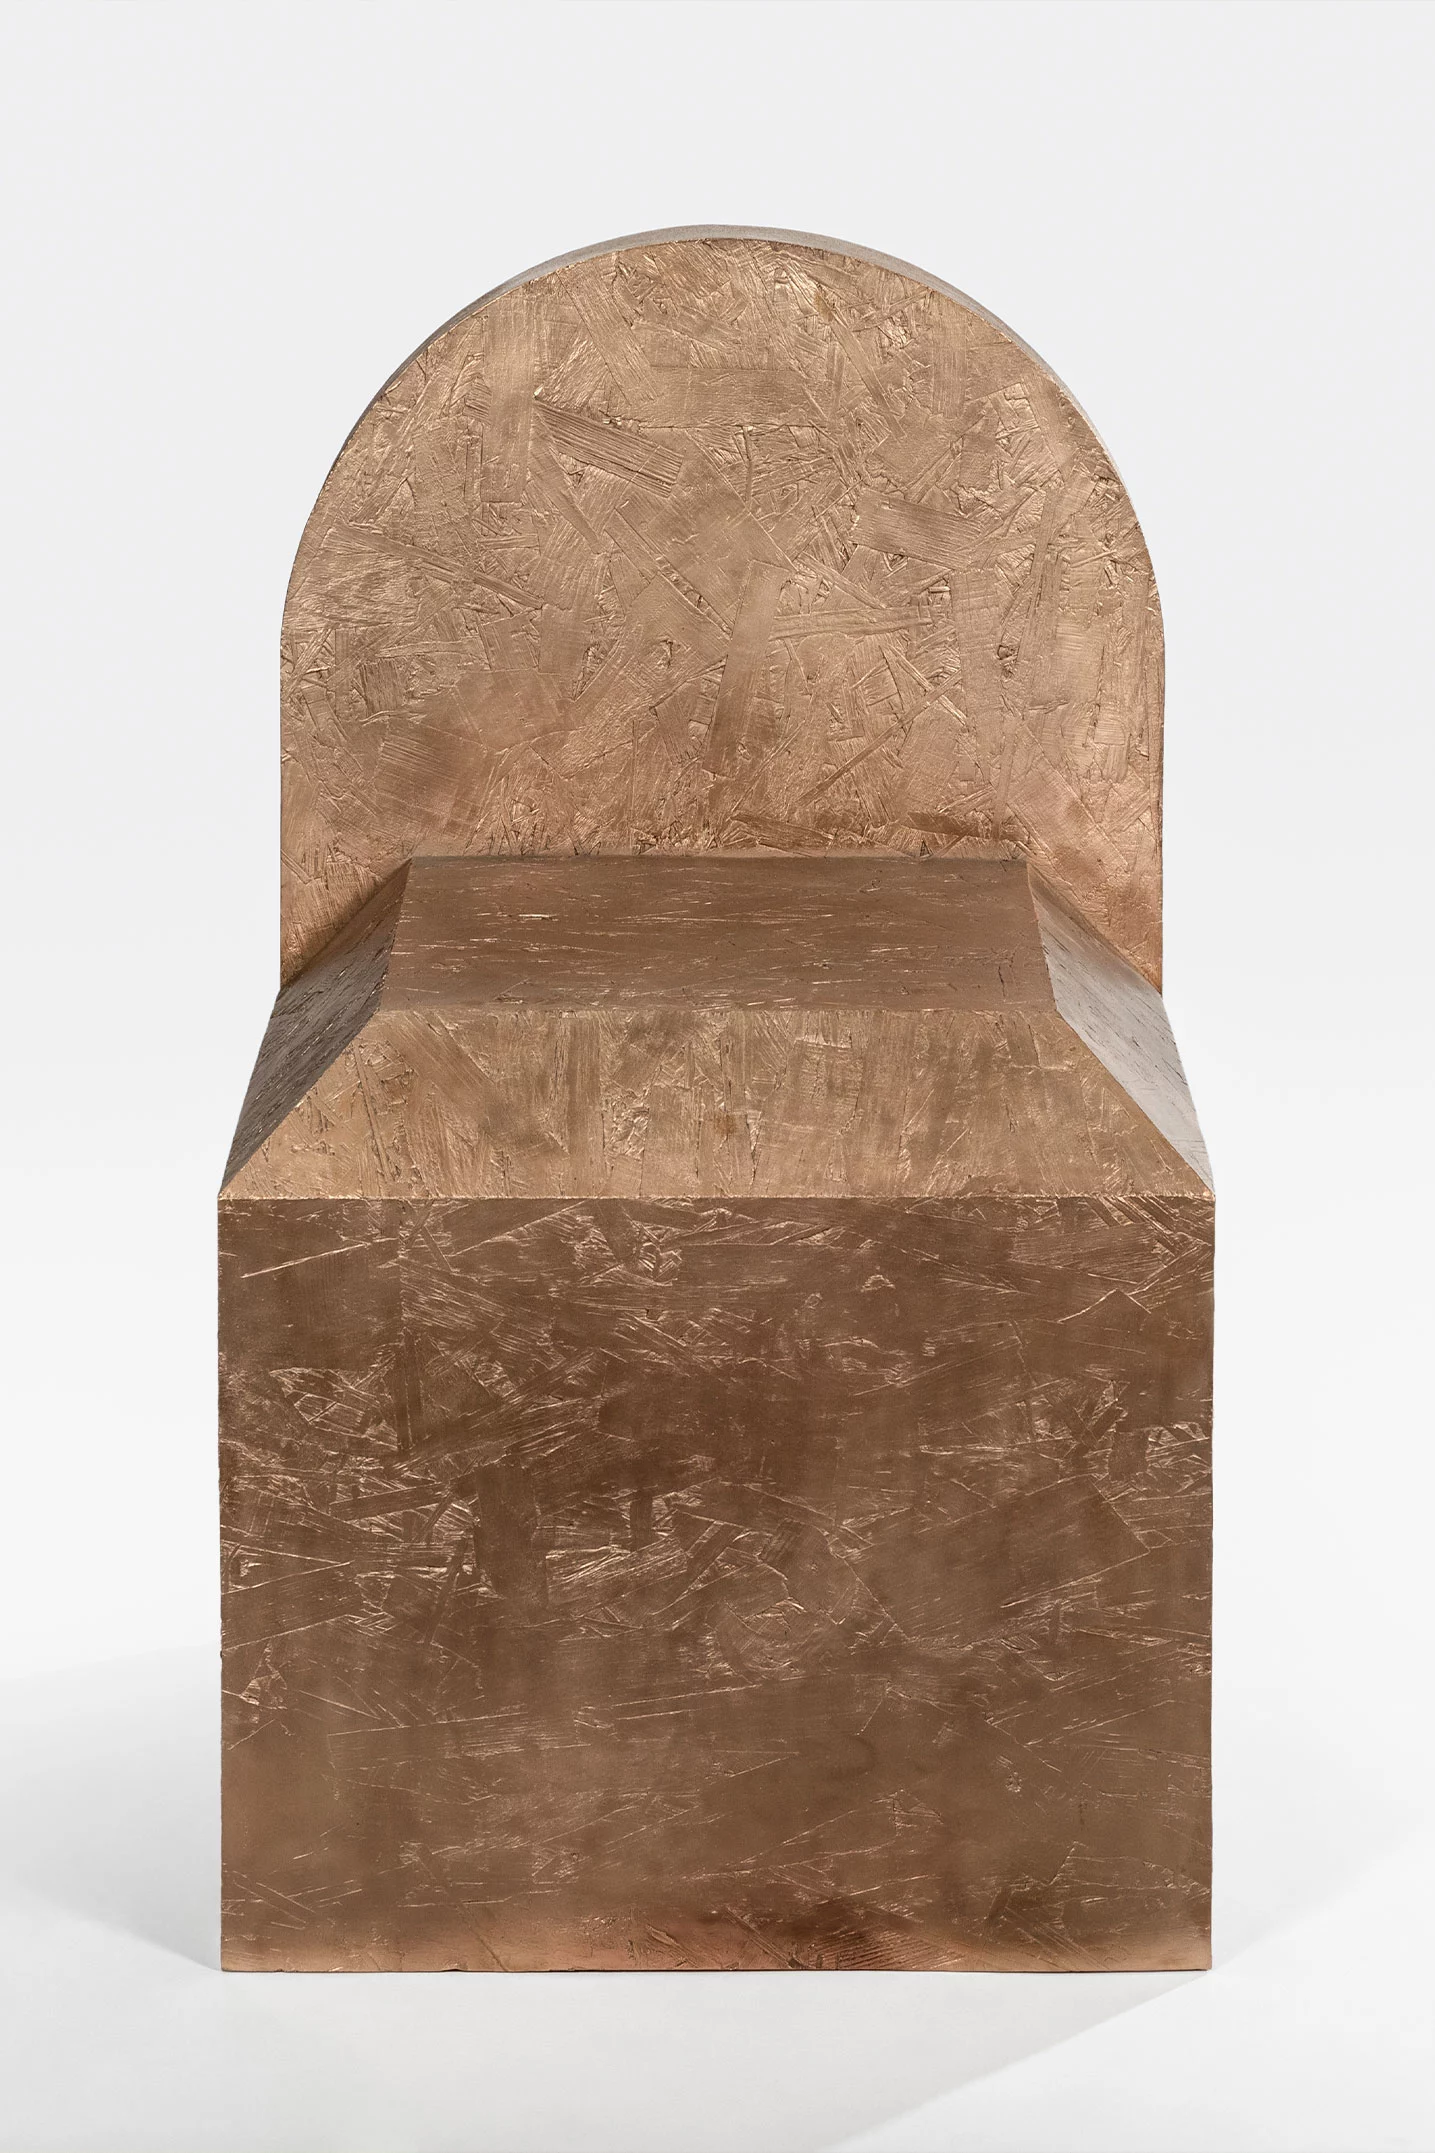 TOWER HILLS - Virgil Abloh - Chair - Galerie kreo